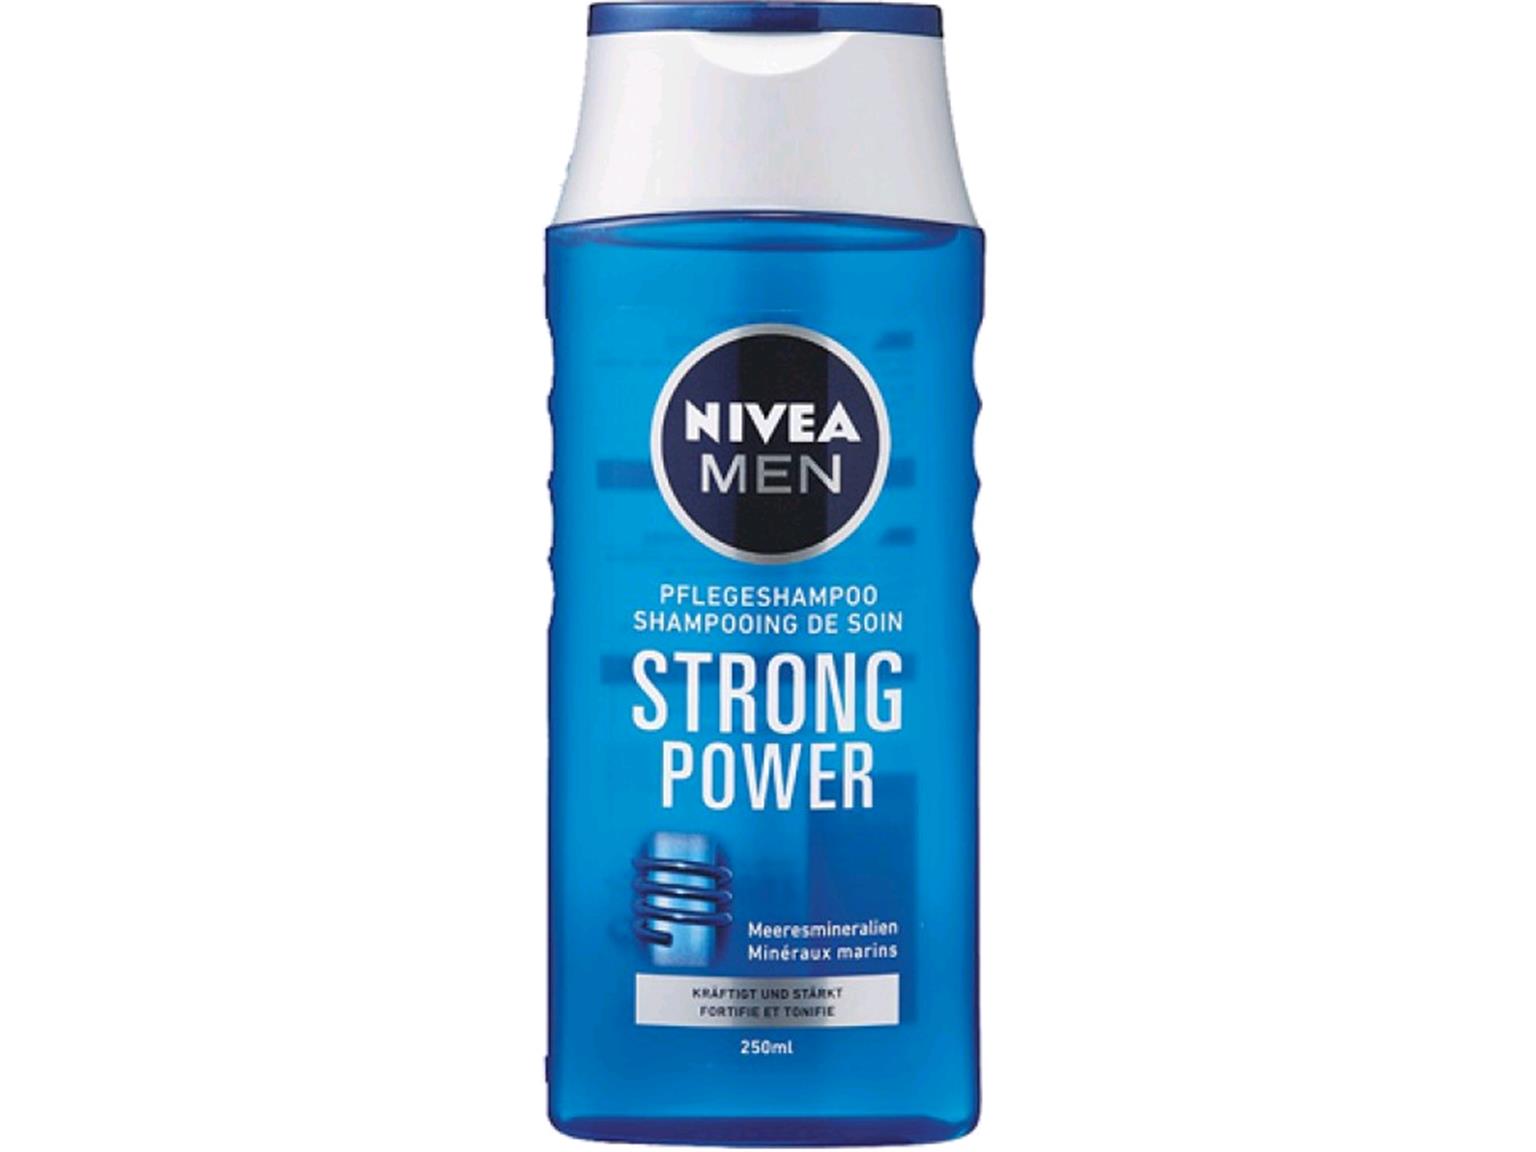 NIVEA SHAMPOO MEN STRONG POWER  250 ml, Flasche, Shampoo Power for Men